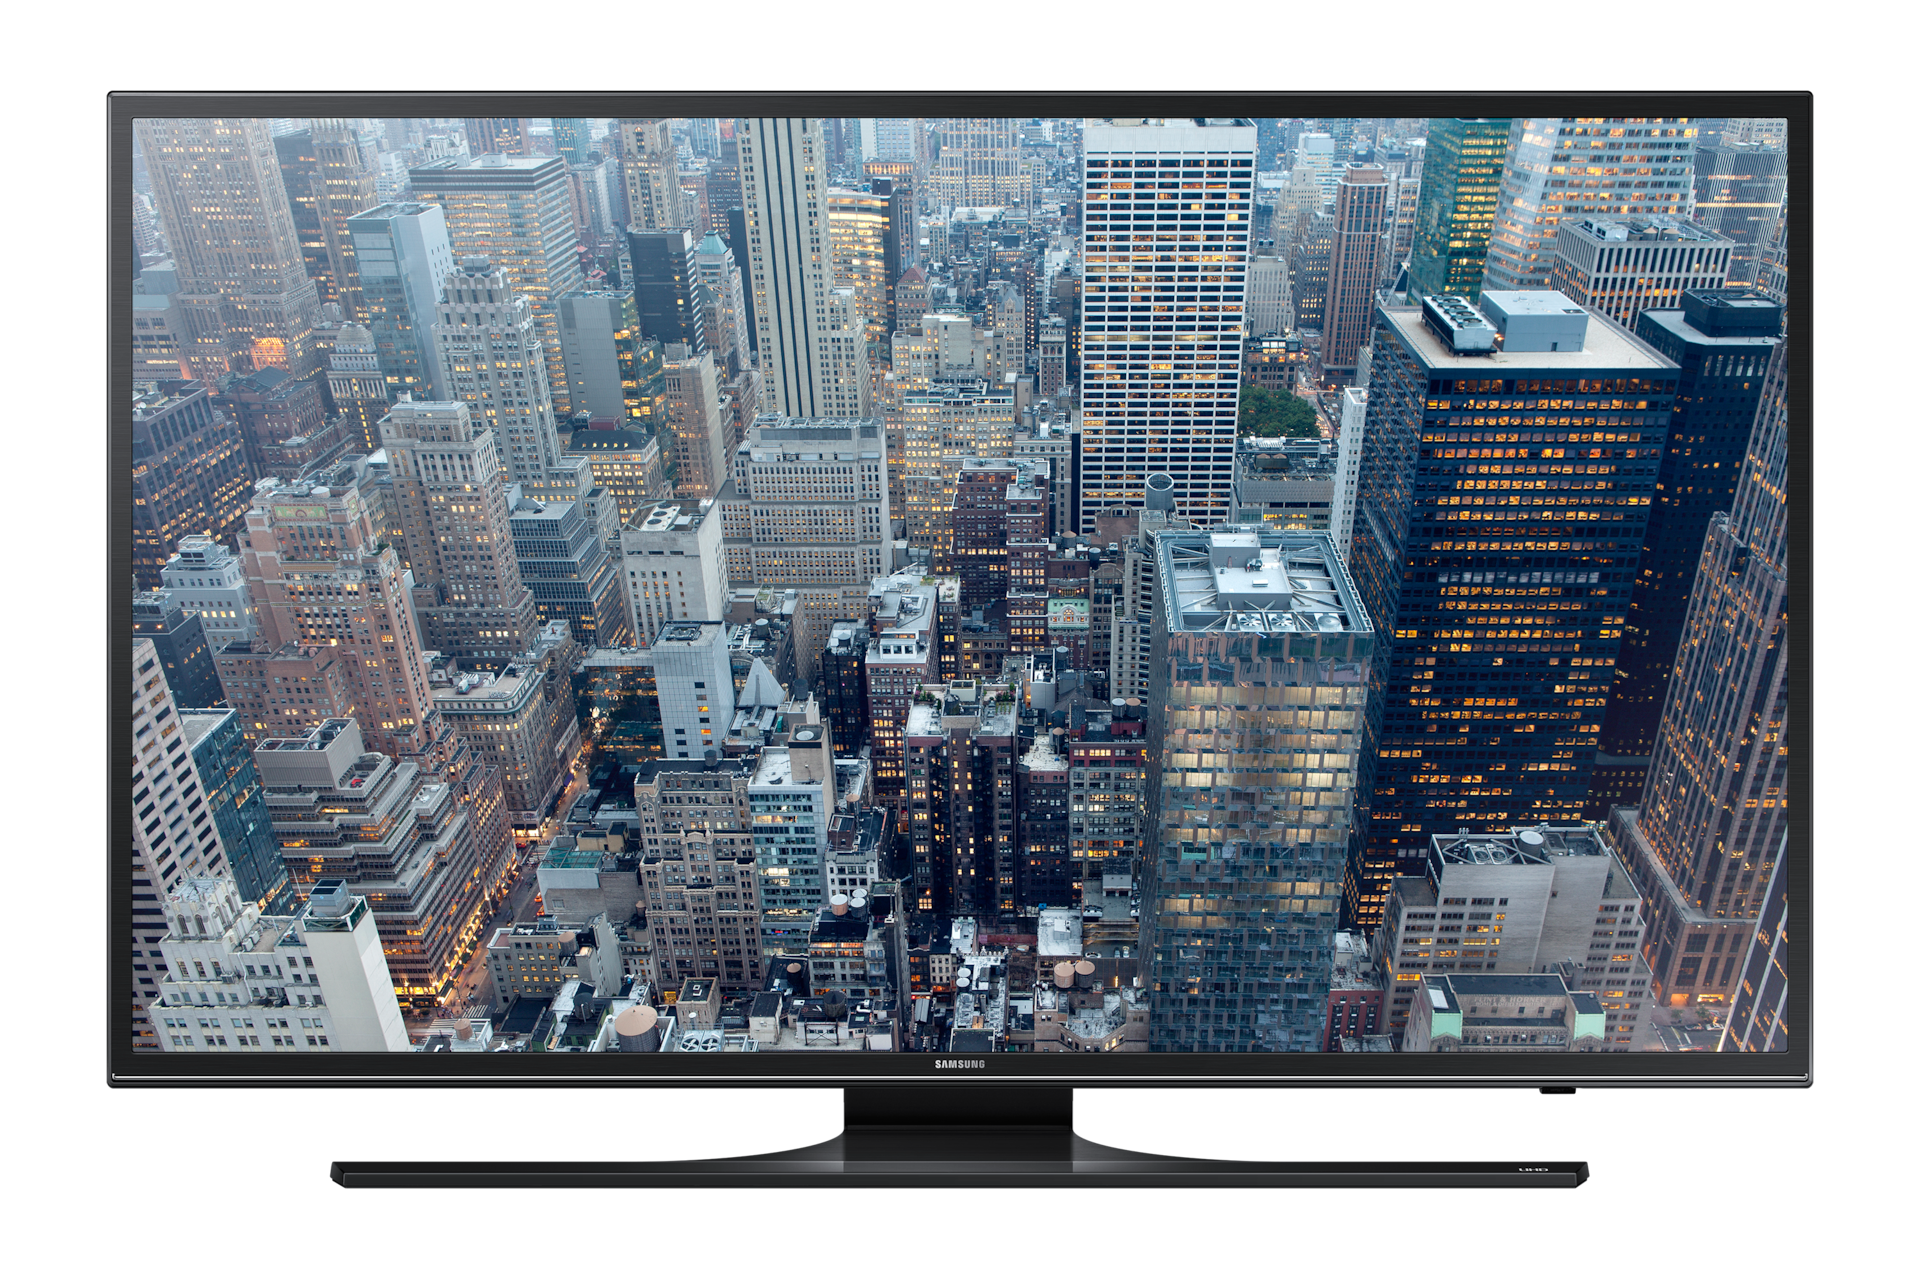 Televisor Samsung Smart LED resolución Ultra HD de 40 pulgadas (incluye  RACK)